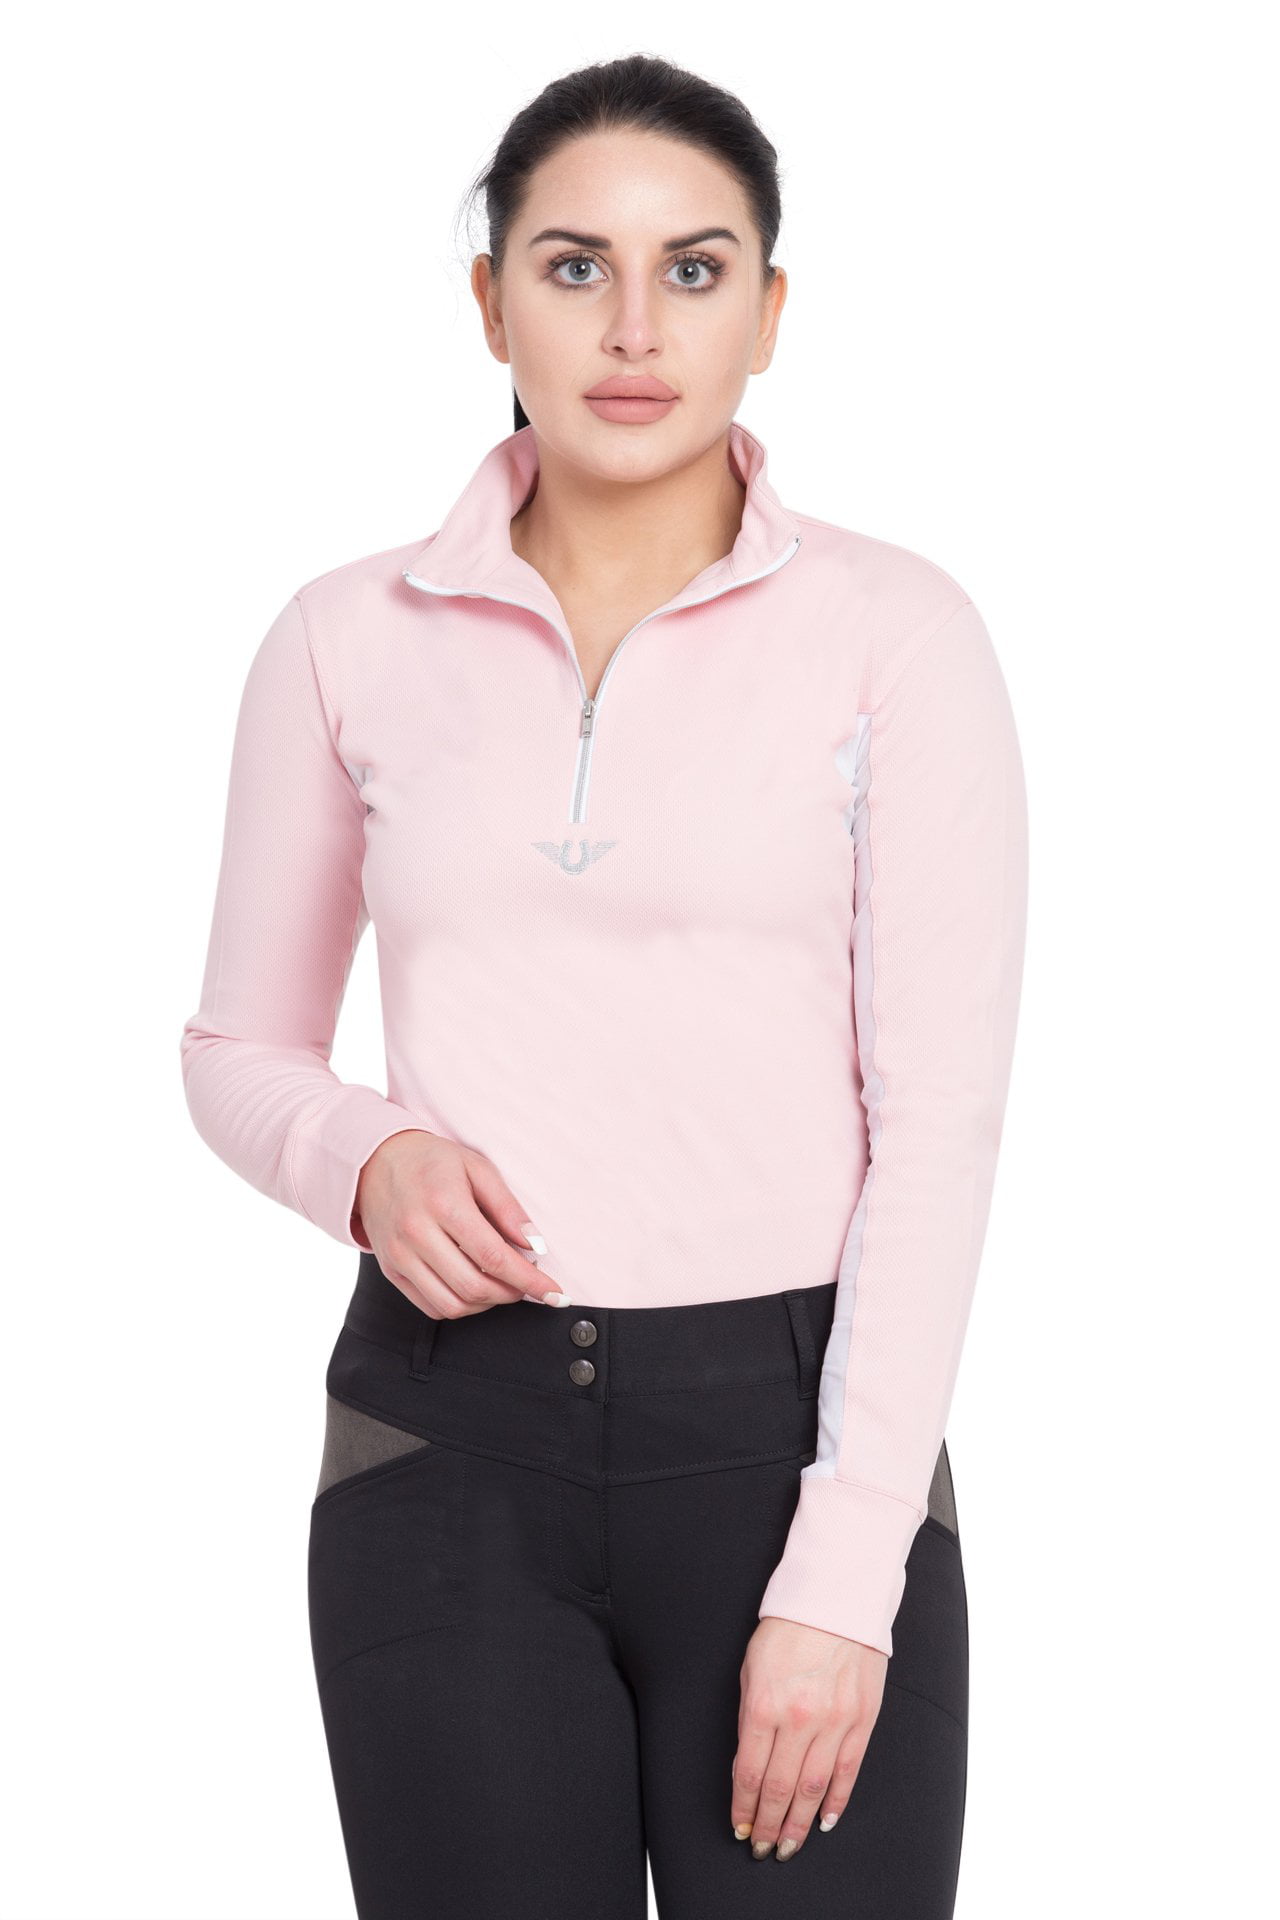 TuffRider Women's Ventilated Technical Long Sleeve Sport Shirt with Mesh